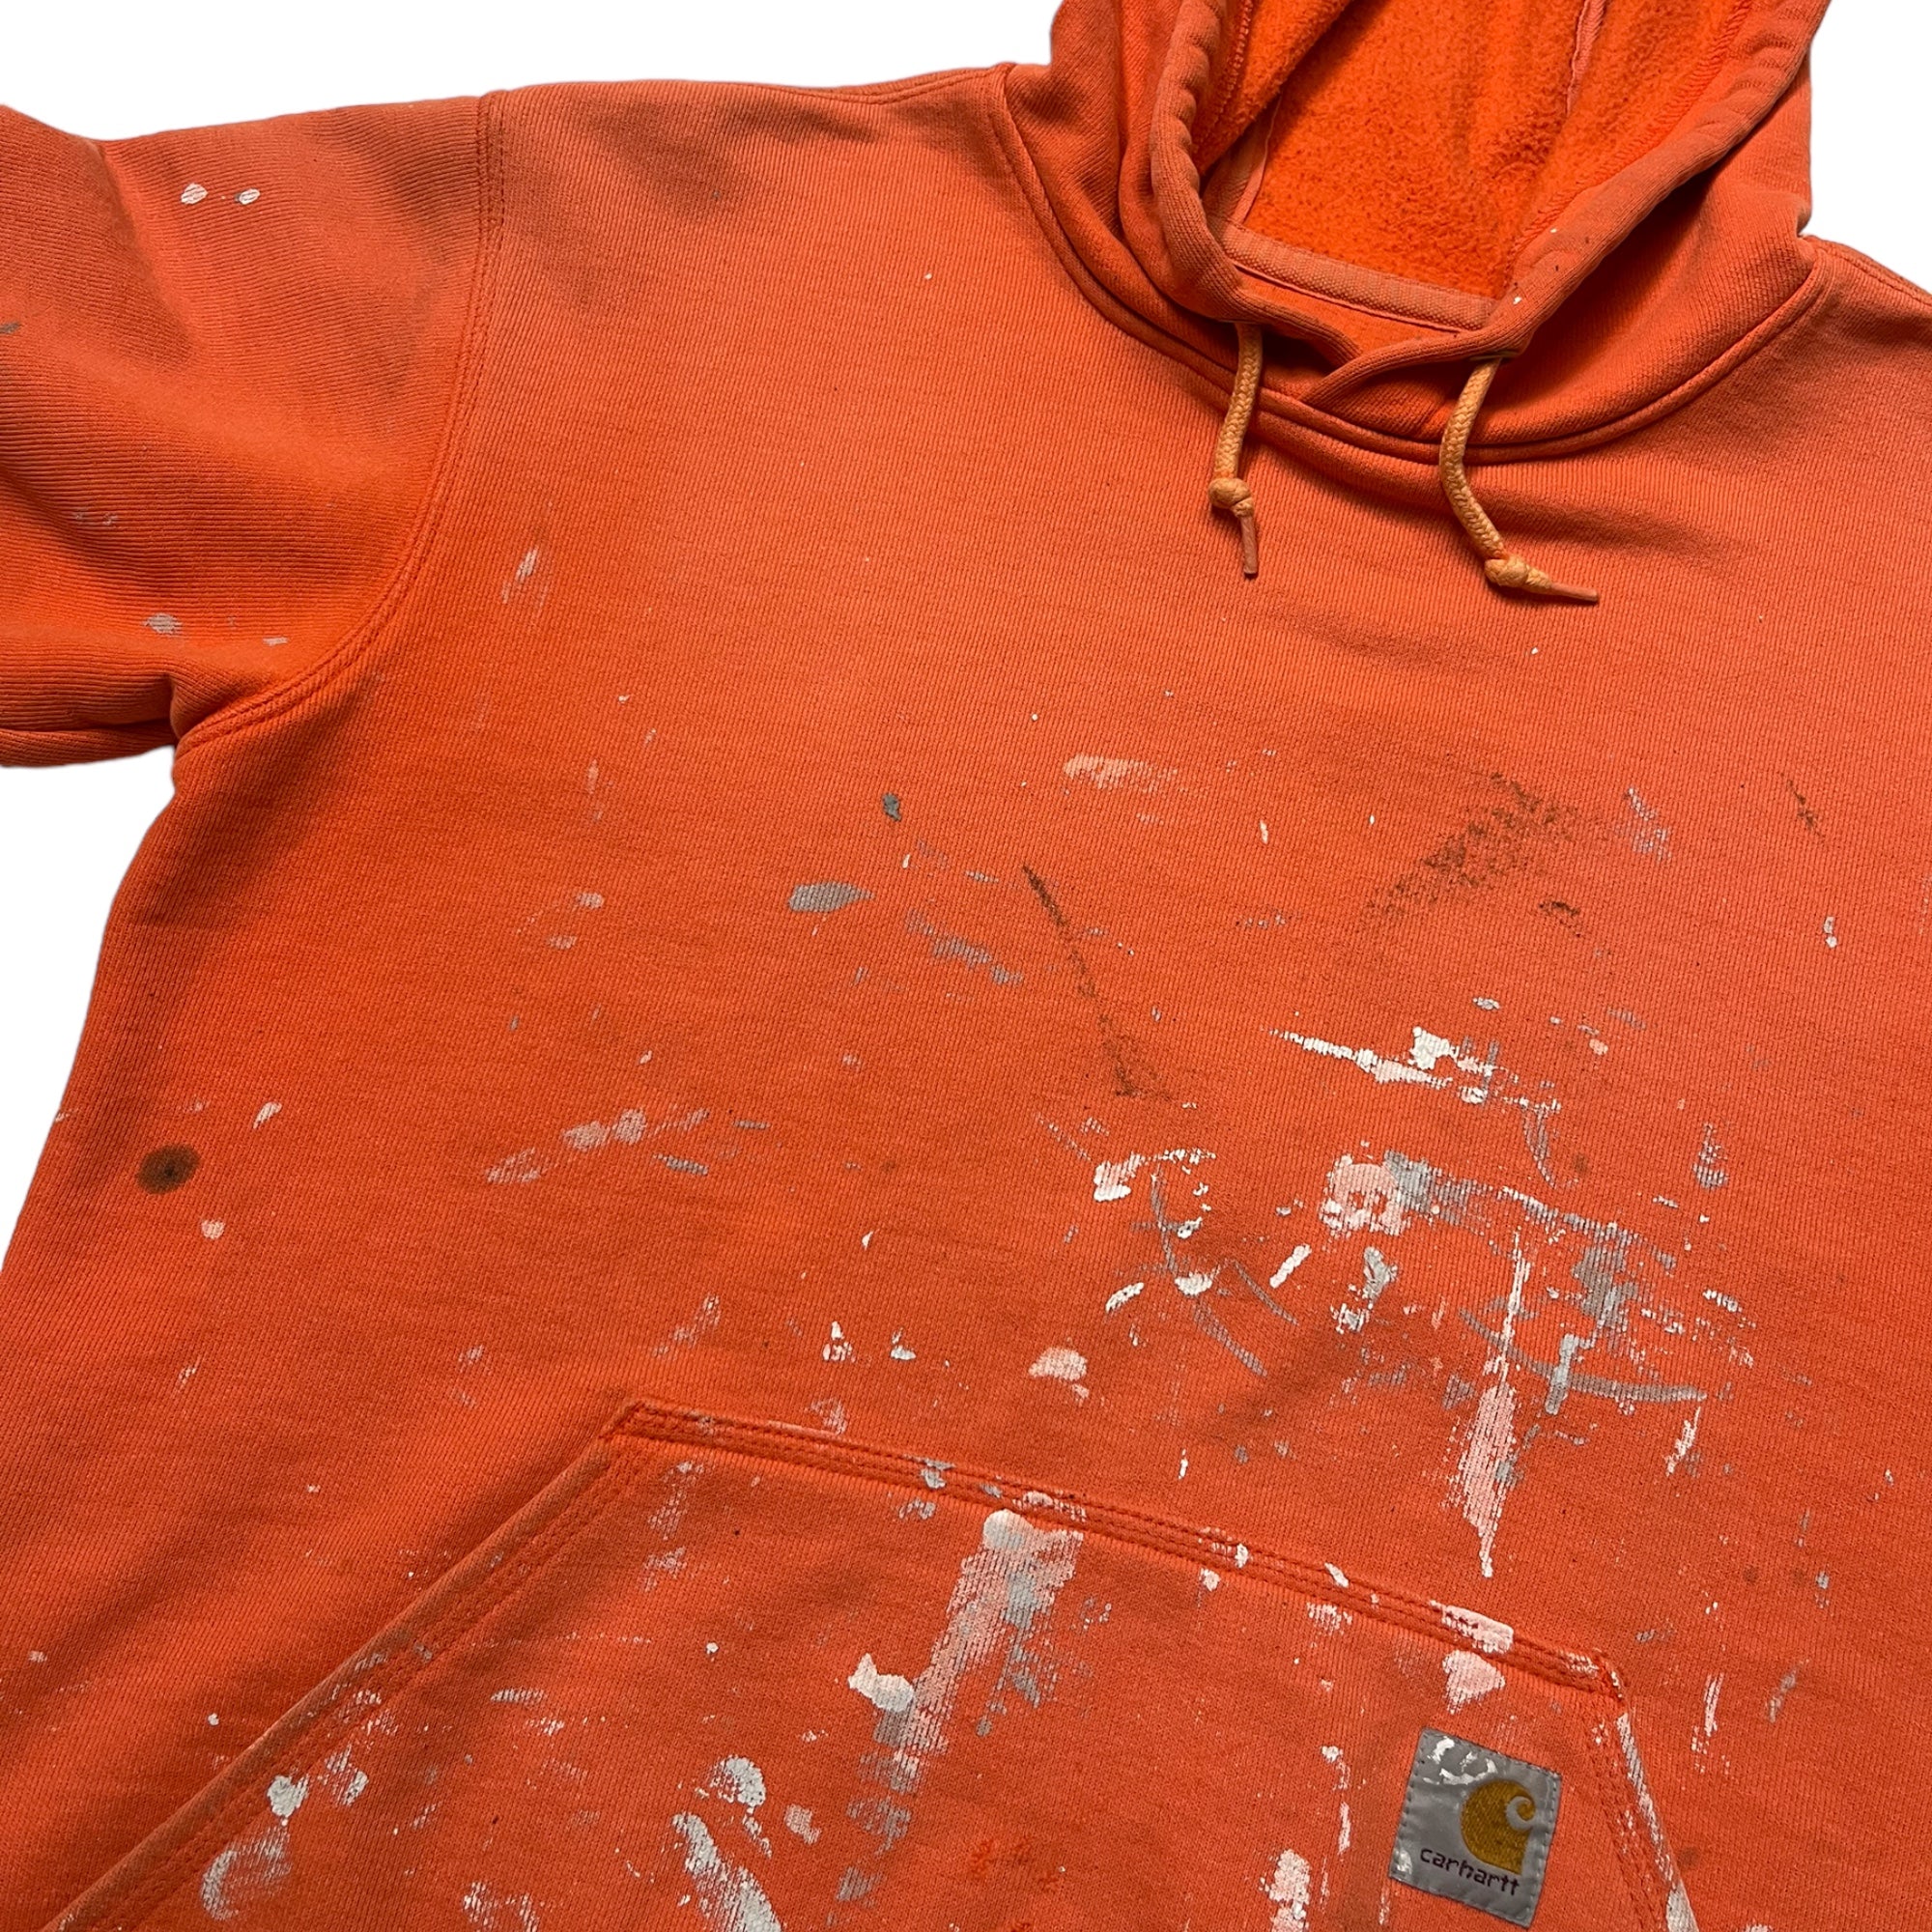 ‘00s Distressed Carhartt Painter Hooded Sweatshirt - Faded Sunkist Orange - S/M/L